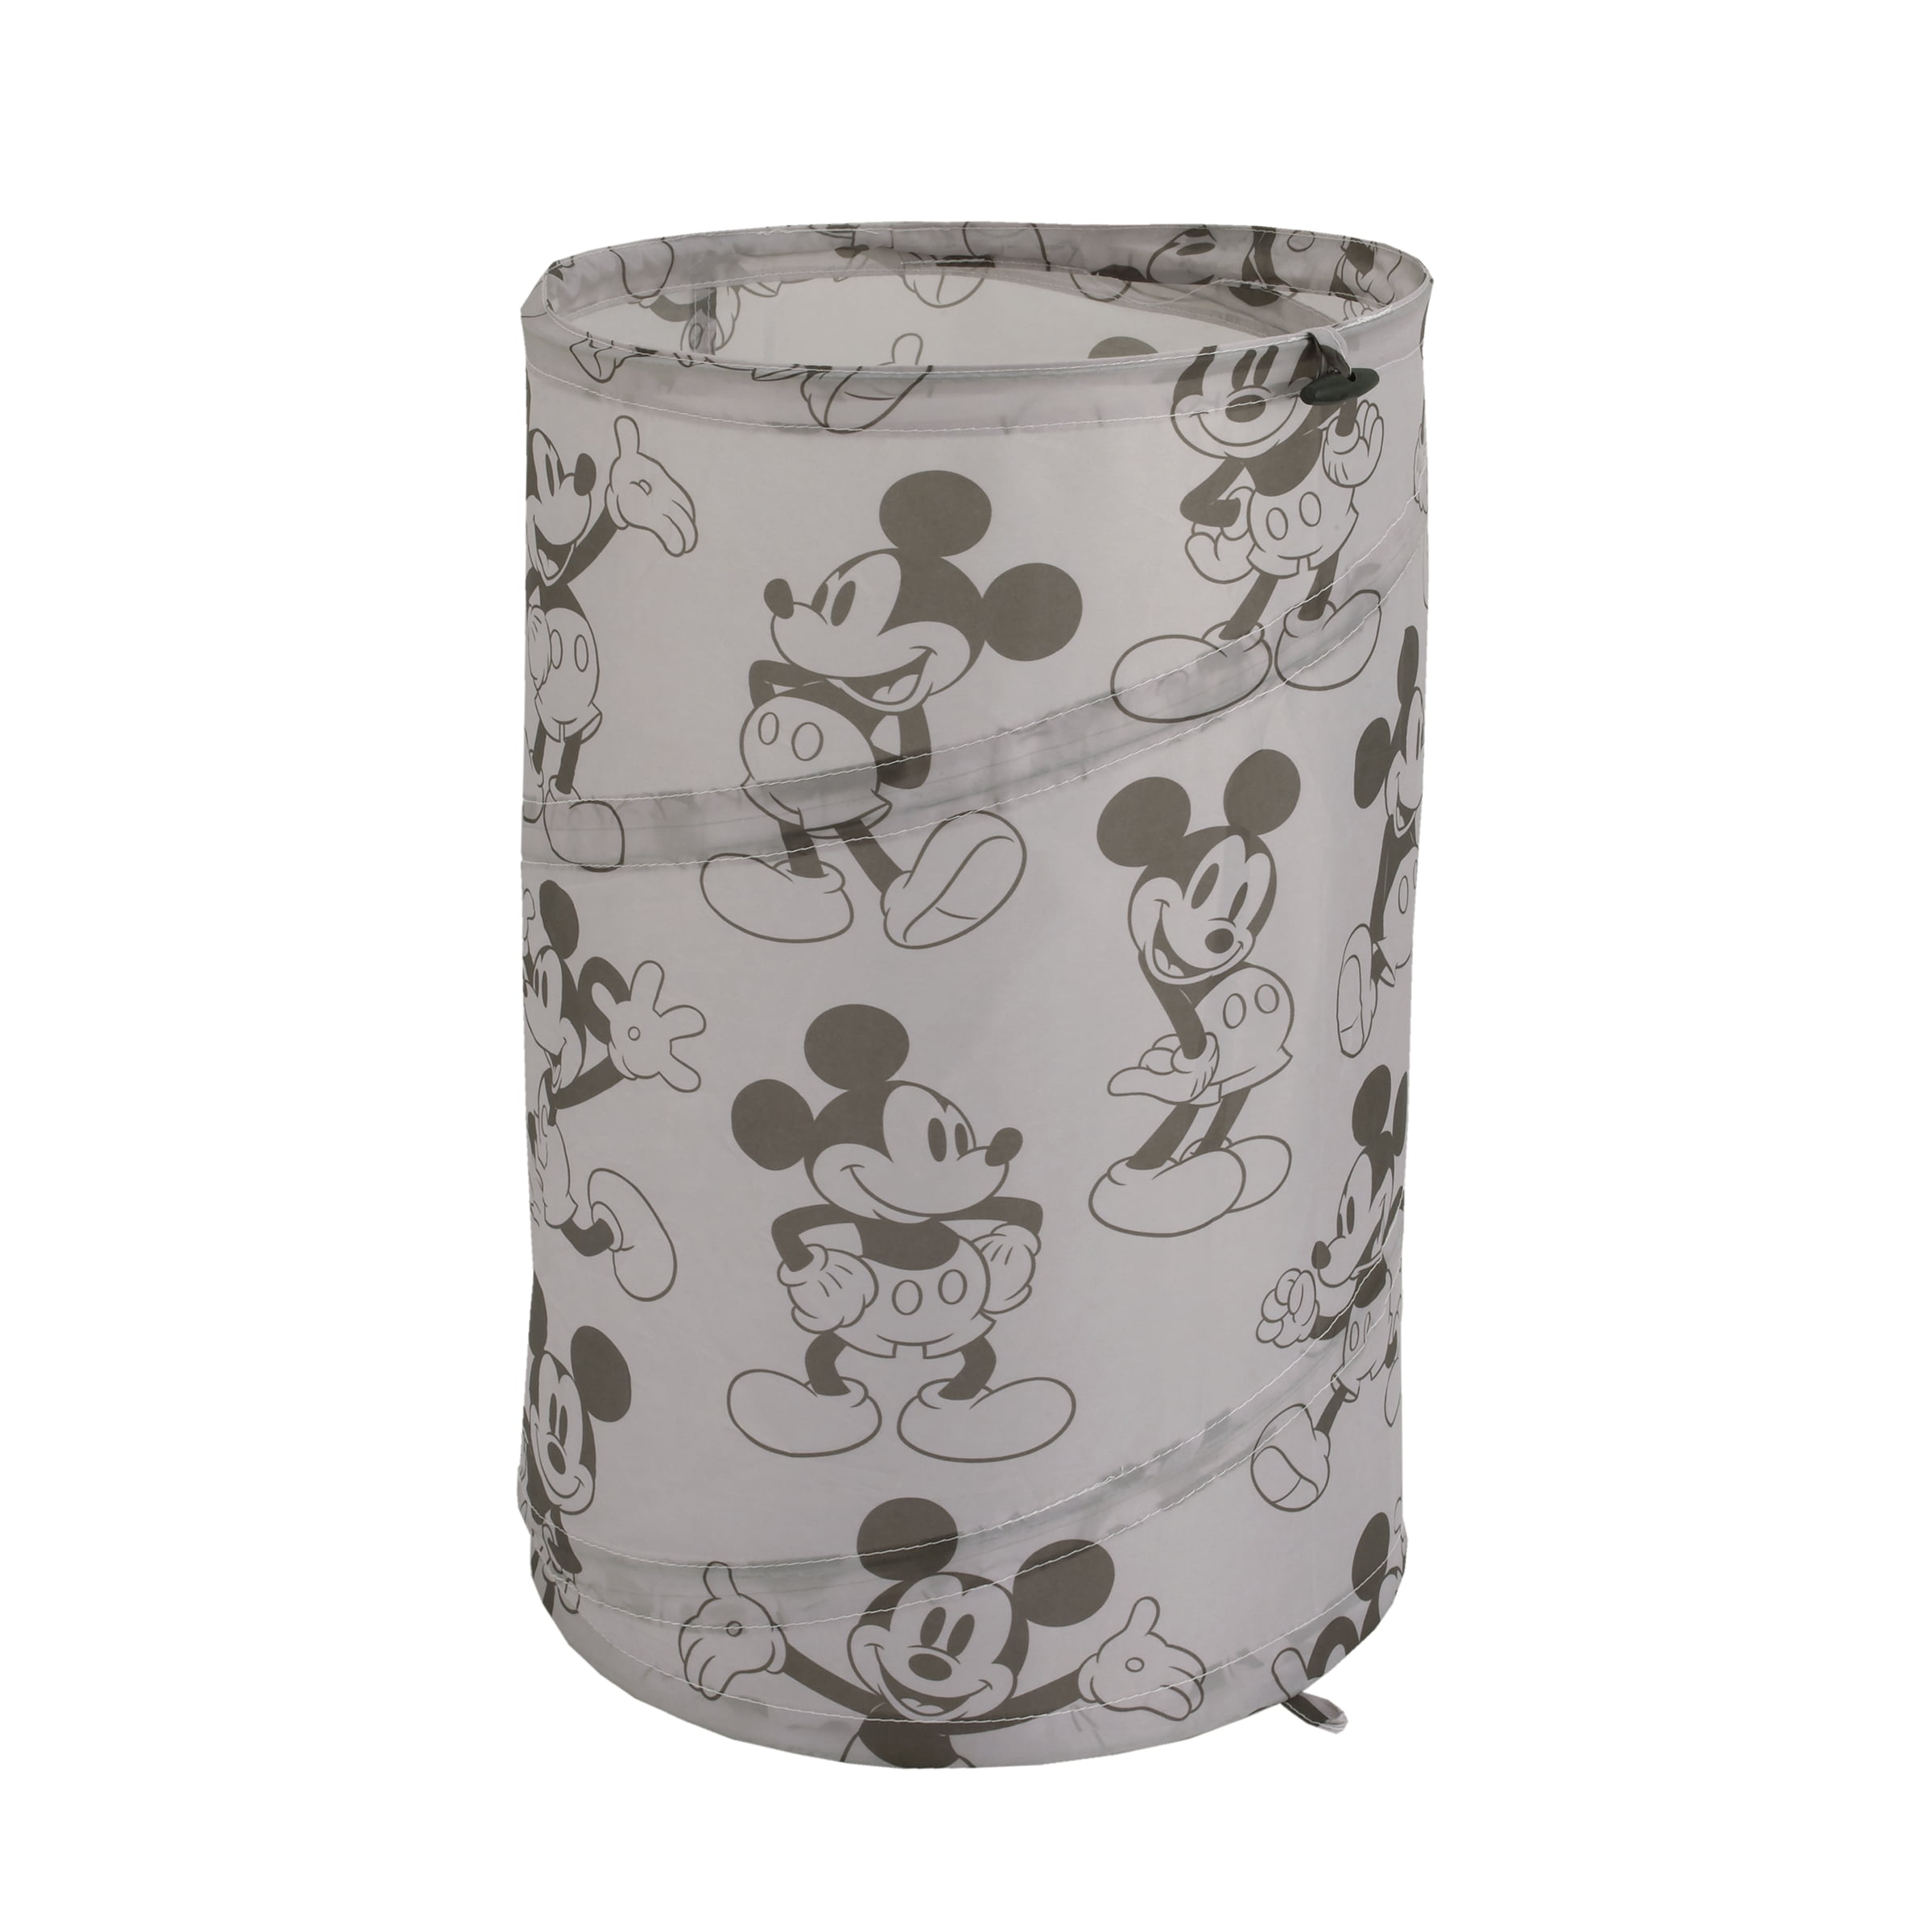 Details about   GCNqat Laundry Basket Mickey Mouse Laundry Hamper Foldable Clothes Bag Foldin... 